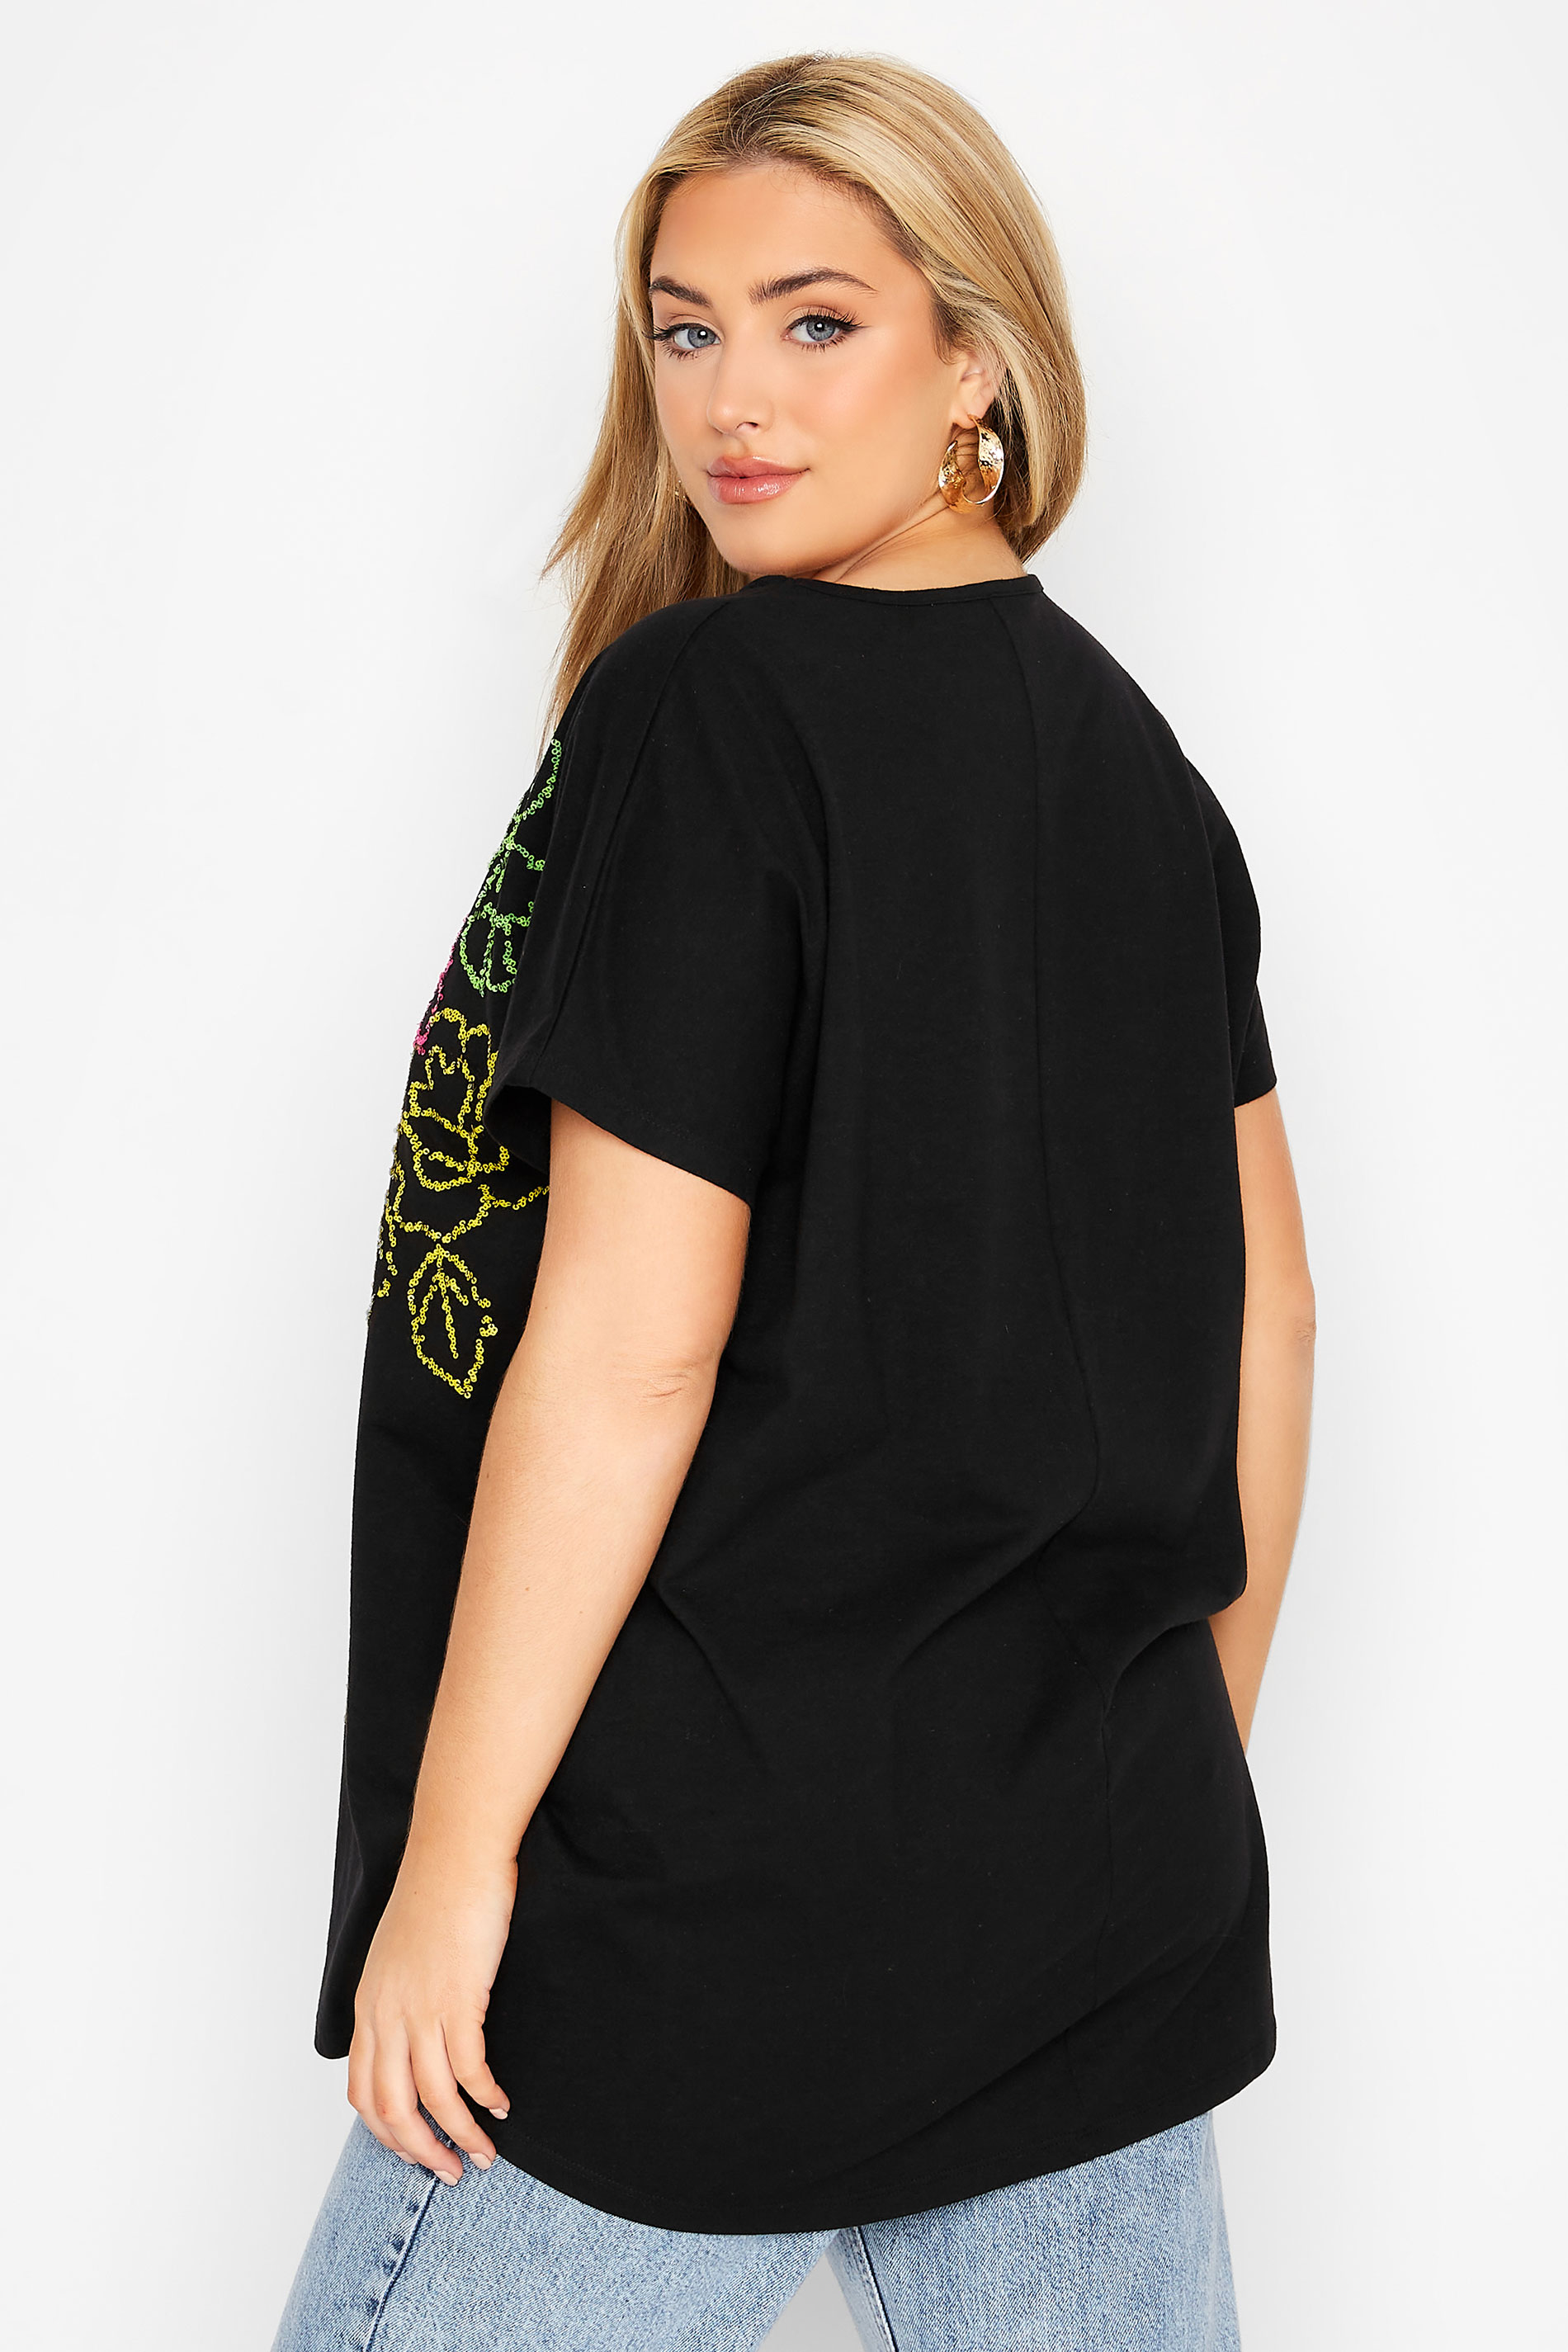 Grande taille  Tops Grande taille  T-Shirts | T-Shirt Noir Design Floral en Sequins - CW90598